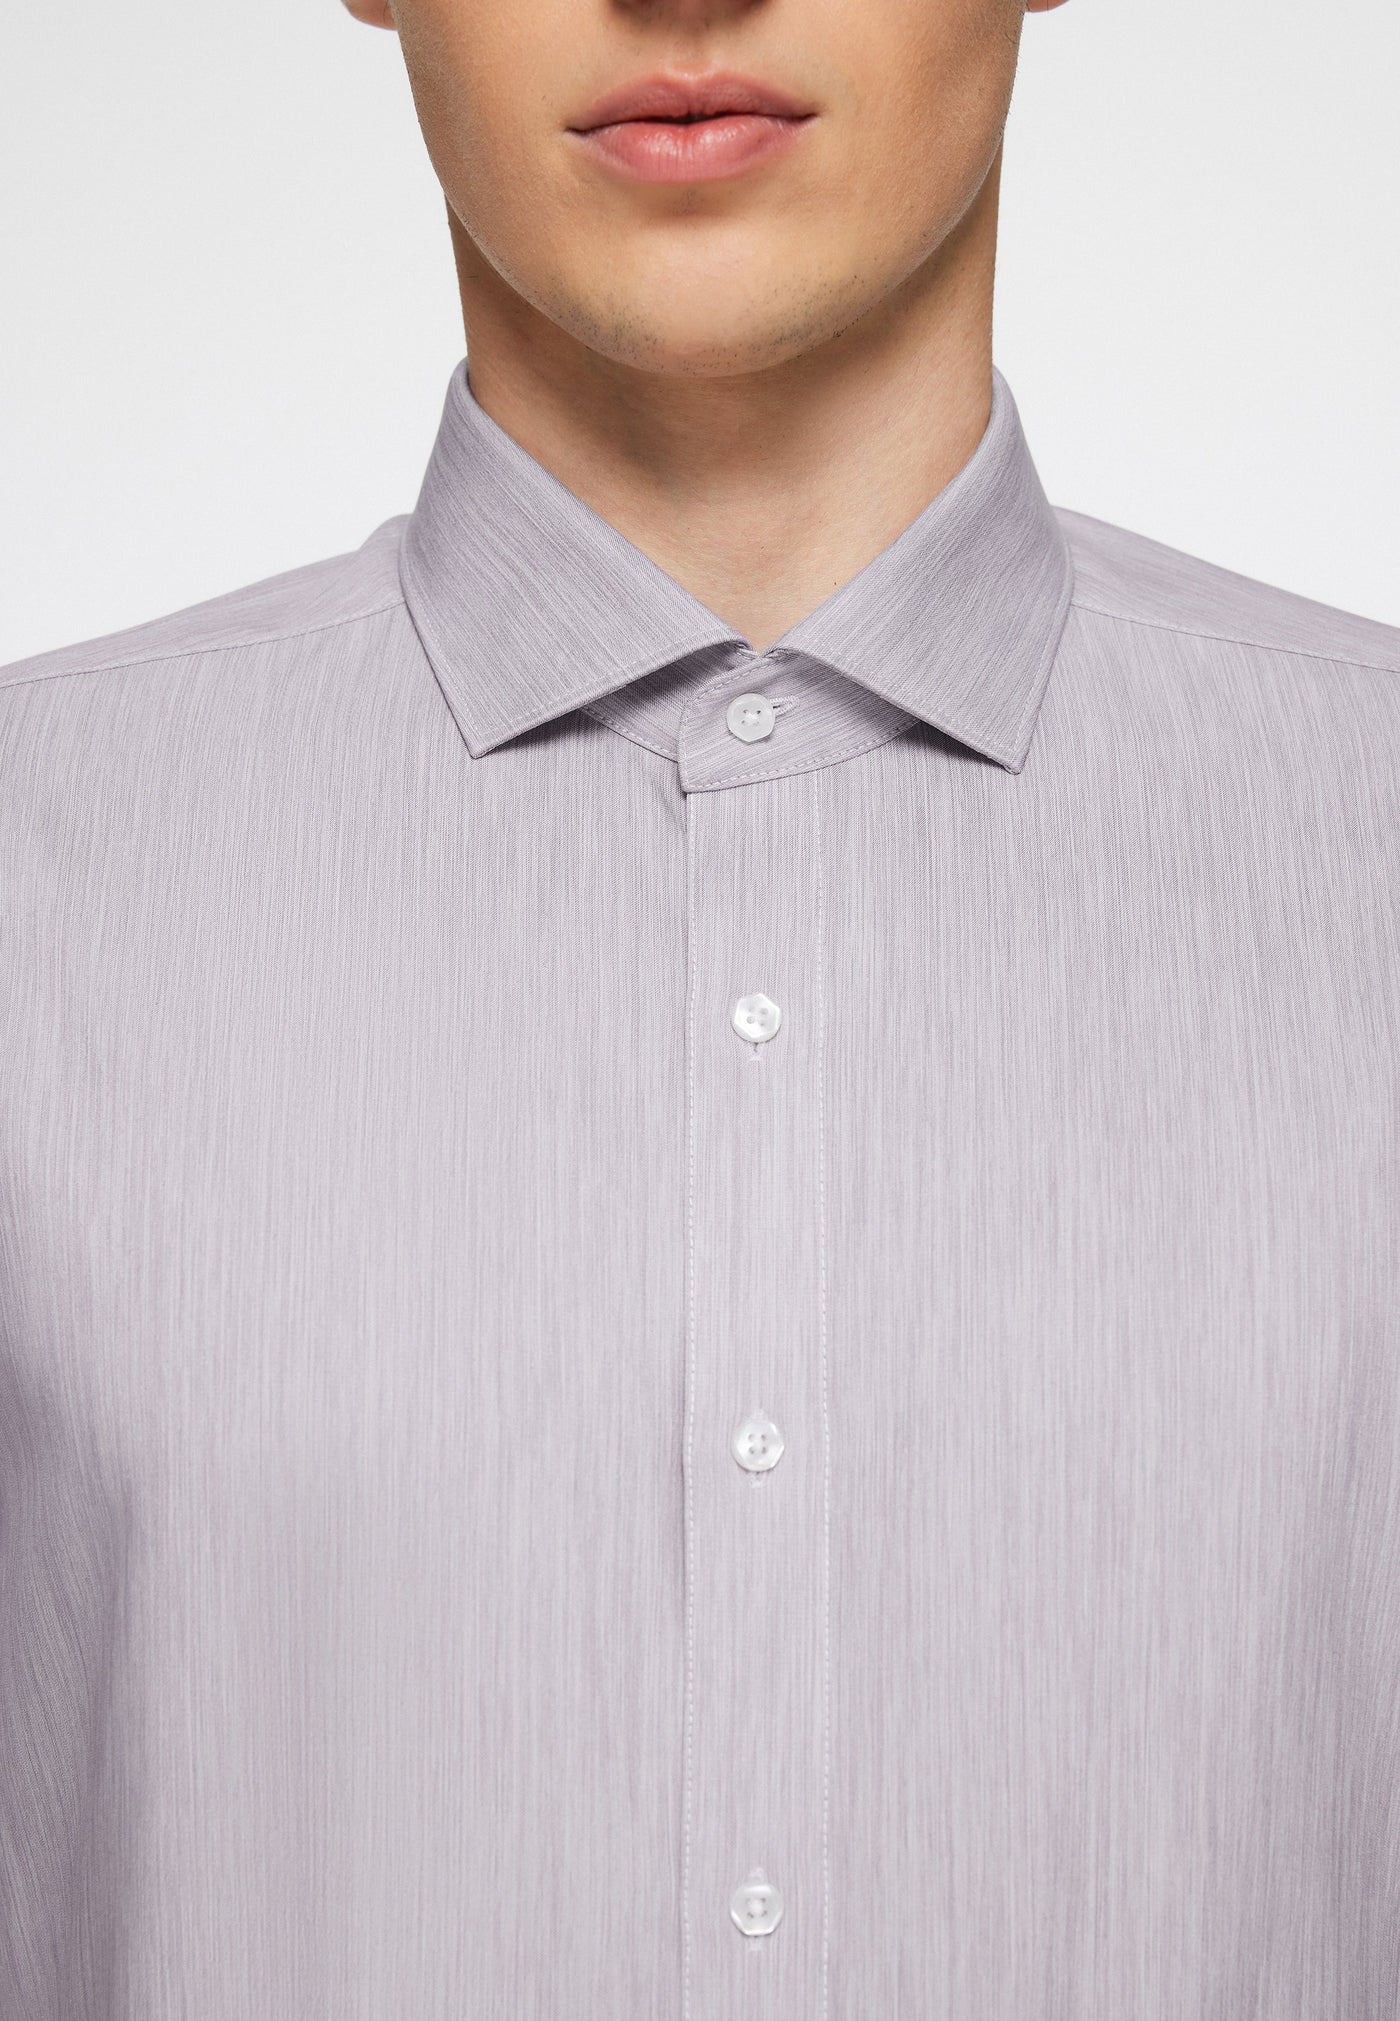 Men Clothing Dry & Sweat Wicking Shirt Smart Fit